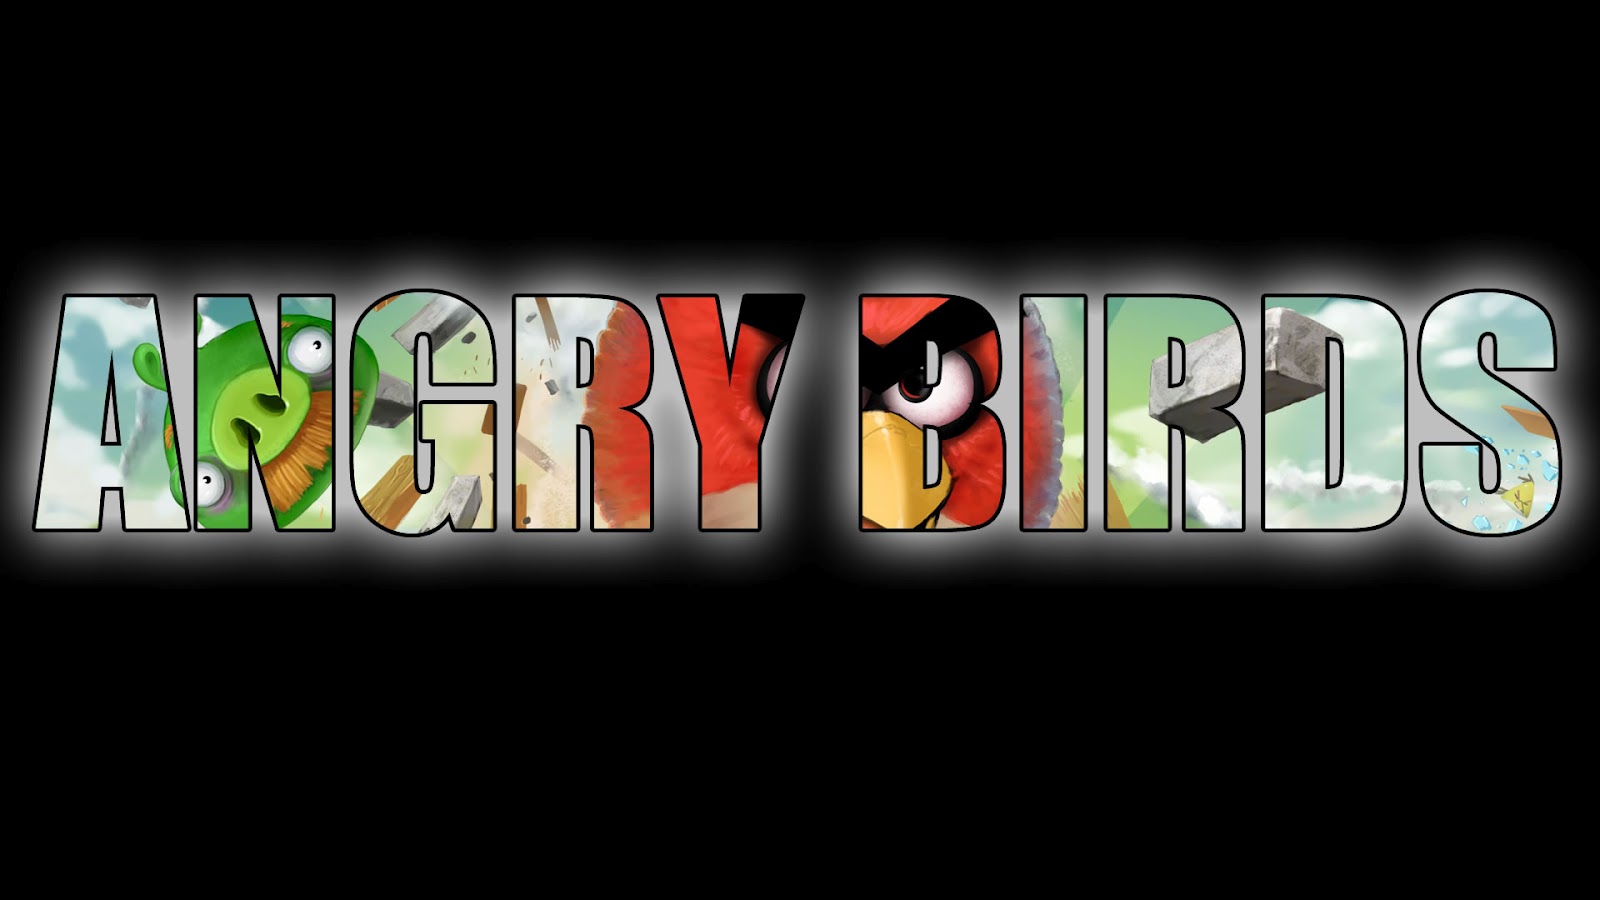 http://3.bp.blogspot.com/-o_s5LUjSmFQ/UBTaw2ZO_UI/AAAAAAAAEFQ/vkbvY5Vyhqo/s1600/latest-widescreen-1920x1080-Angry-Birds-Game-Wallpapers-48.jpg